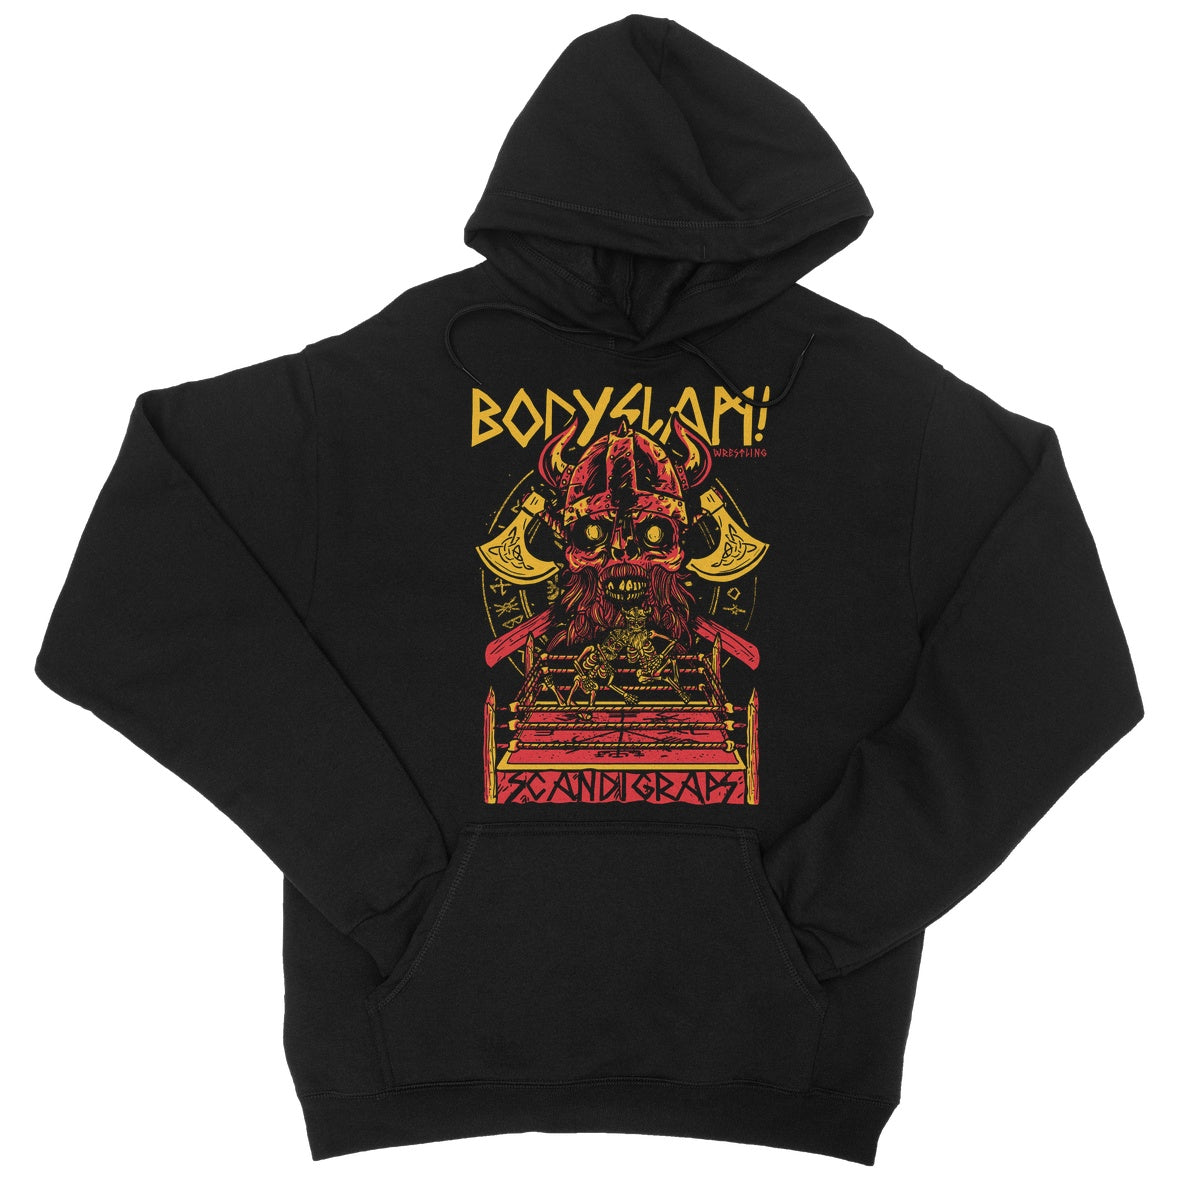 BodySlam! Pro-Wrestling ScandiGraps College Hoodie